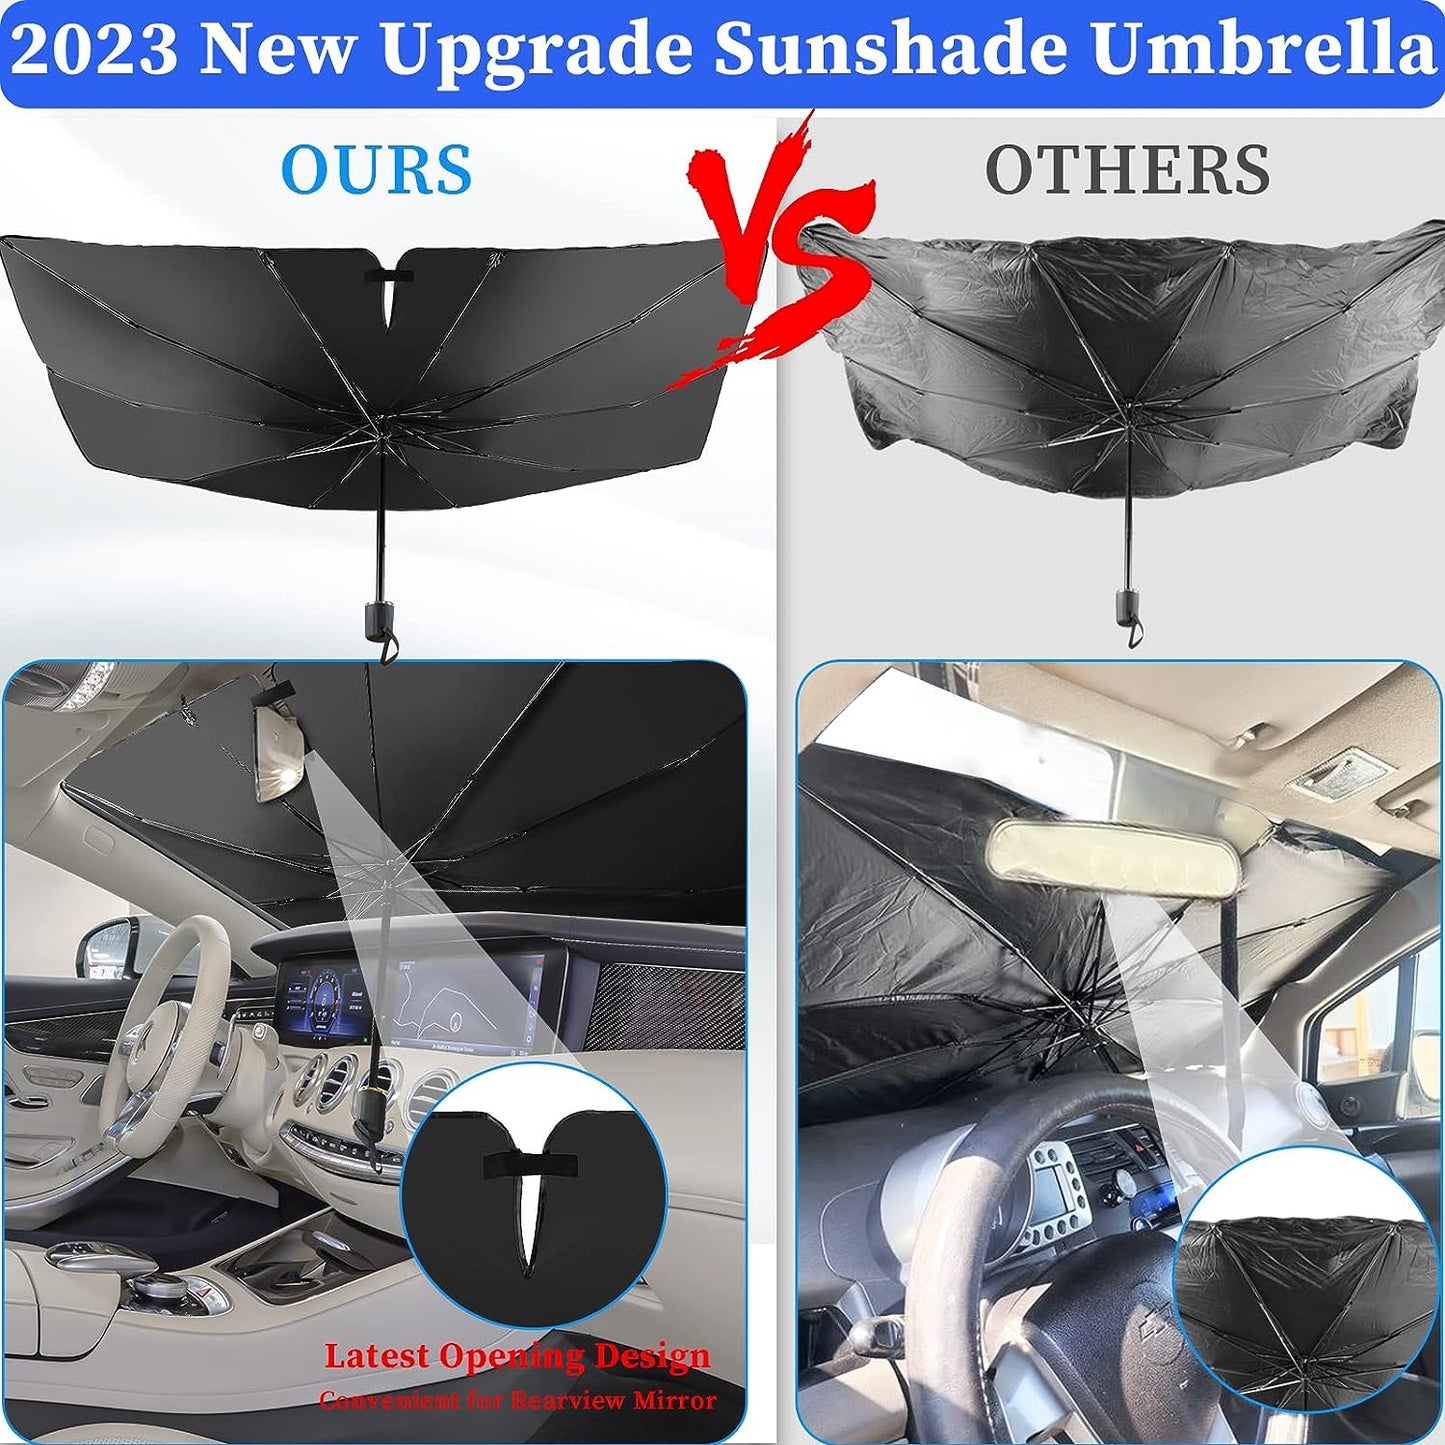 THE Car Sun Shade Windshield Umbrella-Upgraded Opening Design Foldable Car Windshield Cover Sunshade Umbrella UV Block,Automotive Car Front Window of Heat Insulation Protection for Most Car SUV CRV Trucks